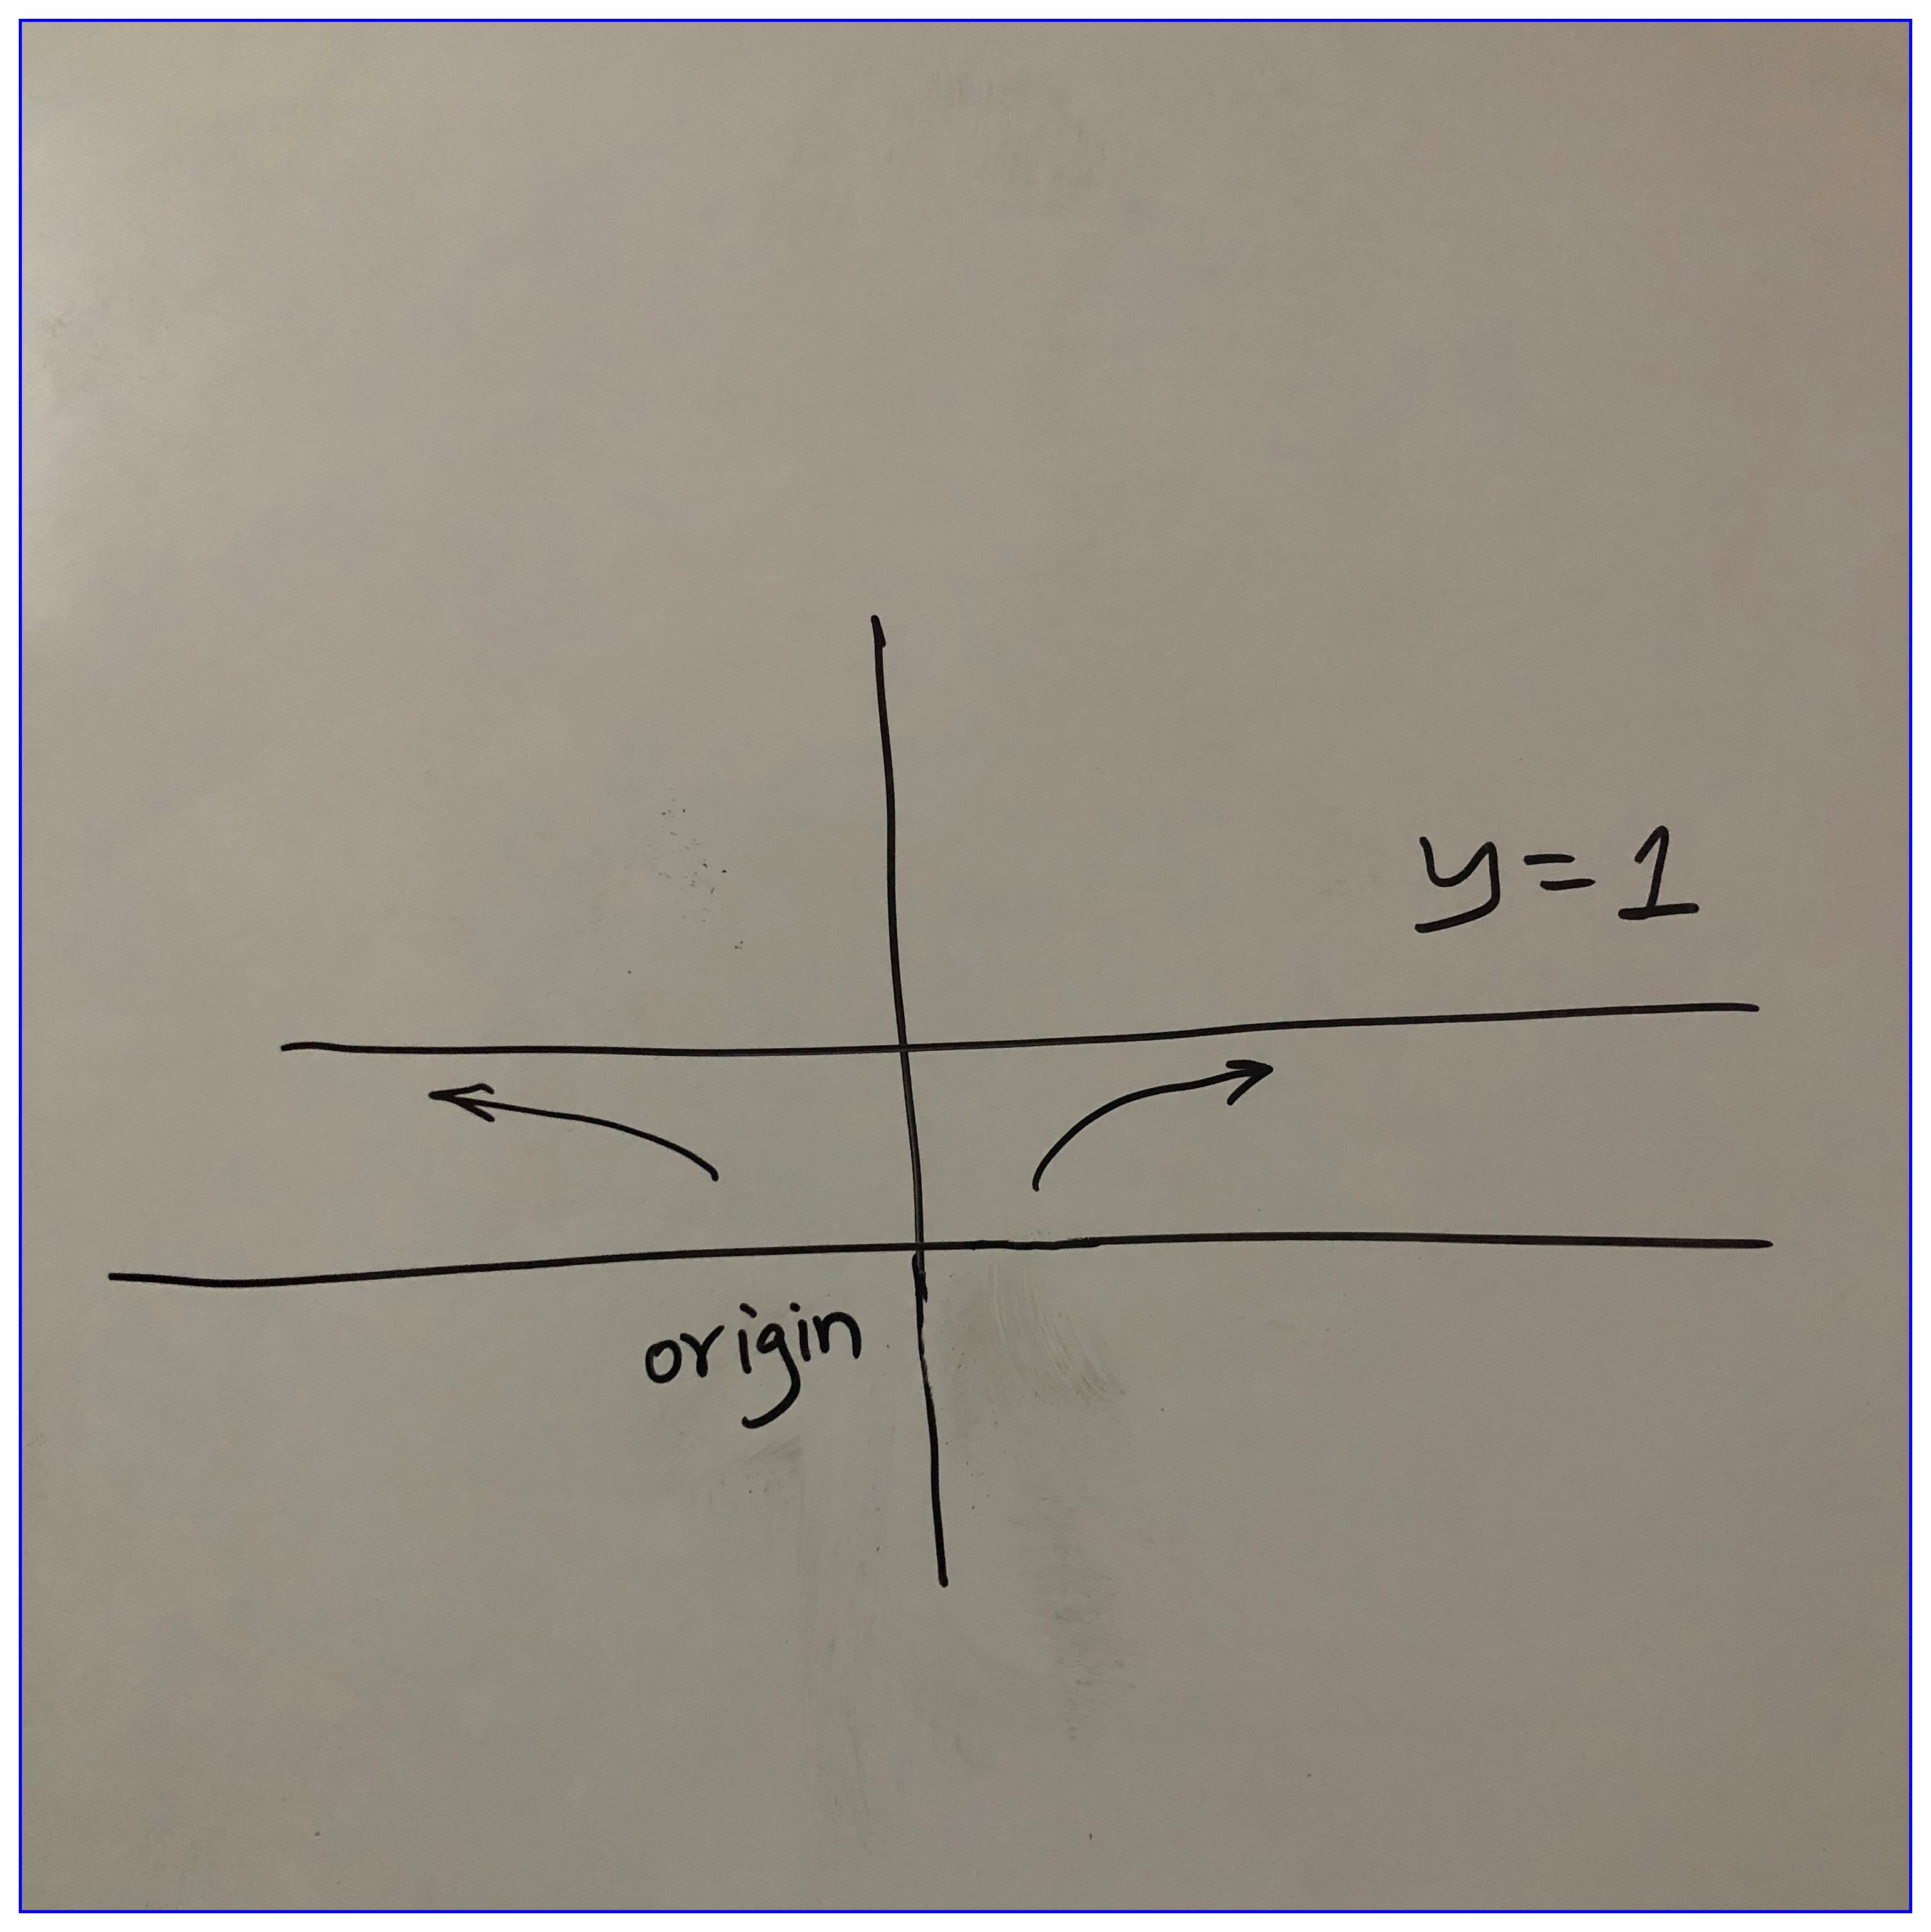 Curve and asymptote of $\dfrac{x^2}{x^2 + 1}$